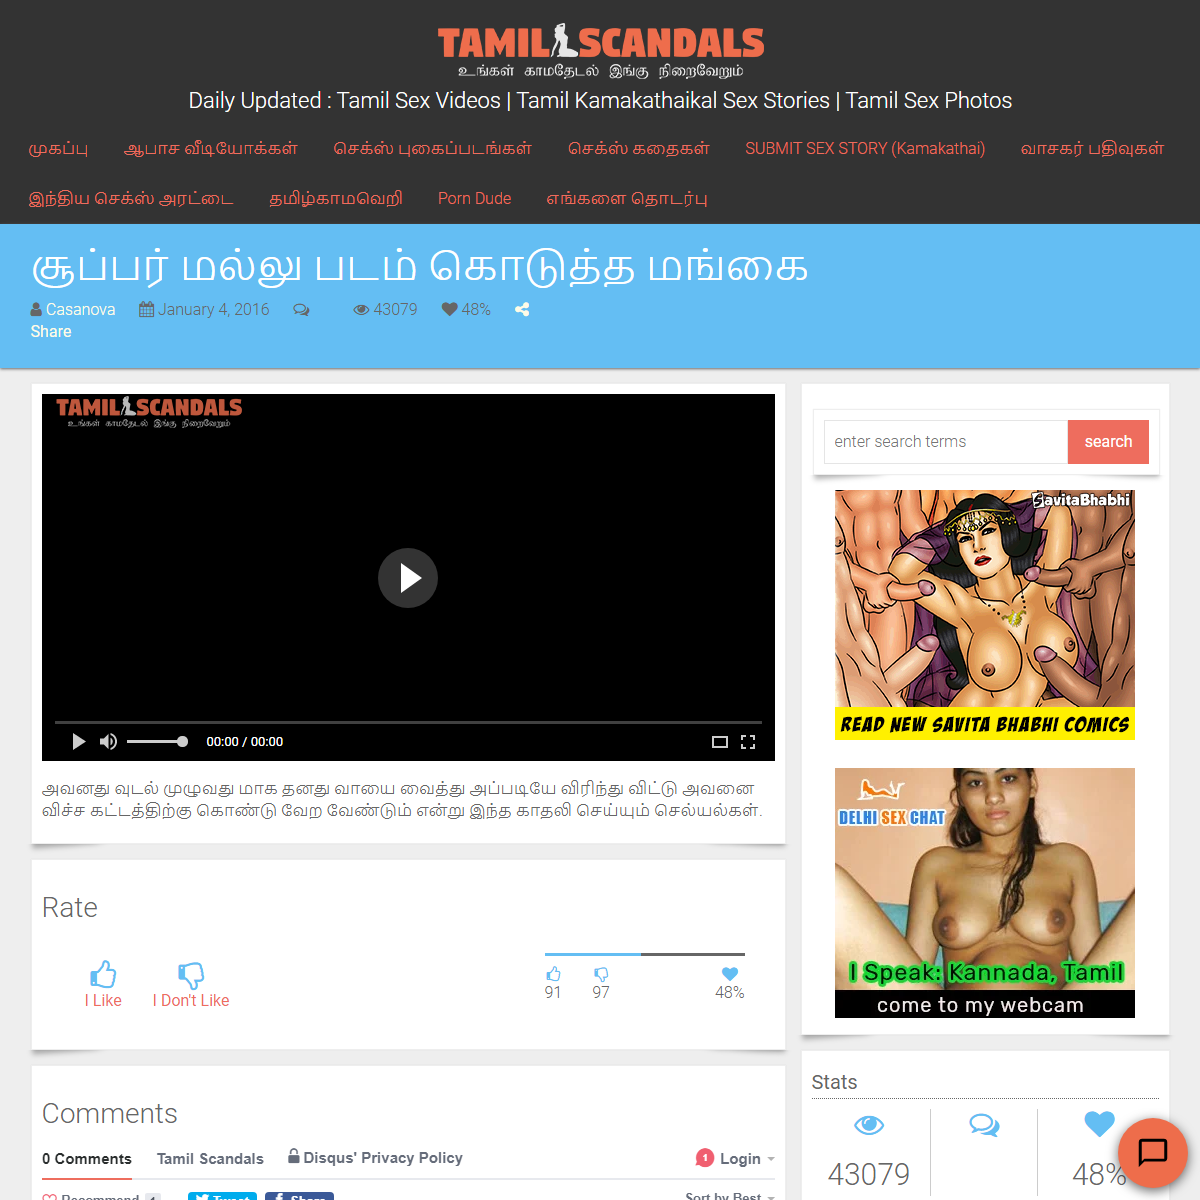 A complete backup of https://www.tamilscandals.com/jodi/pool-koduthu-sappu/